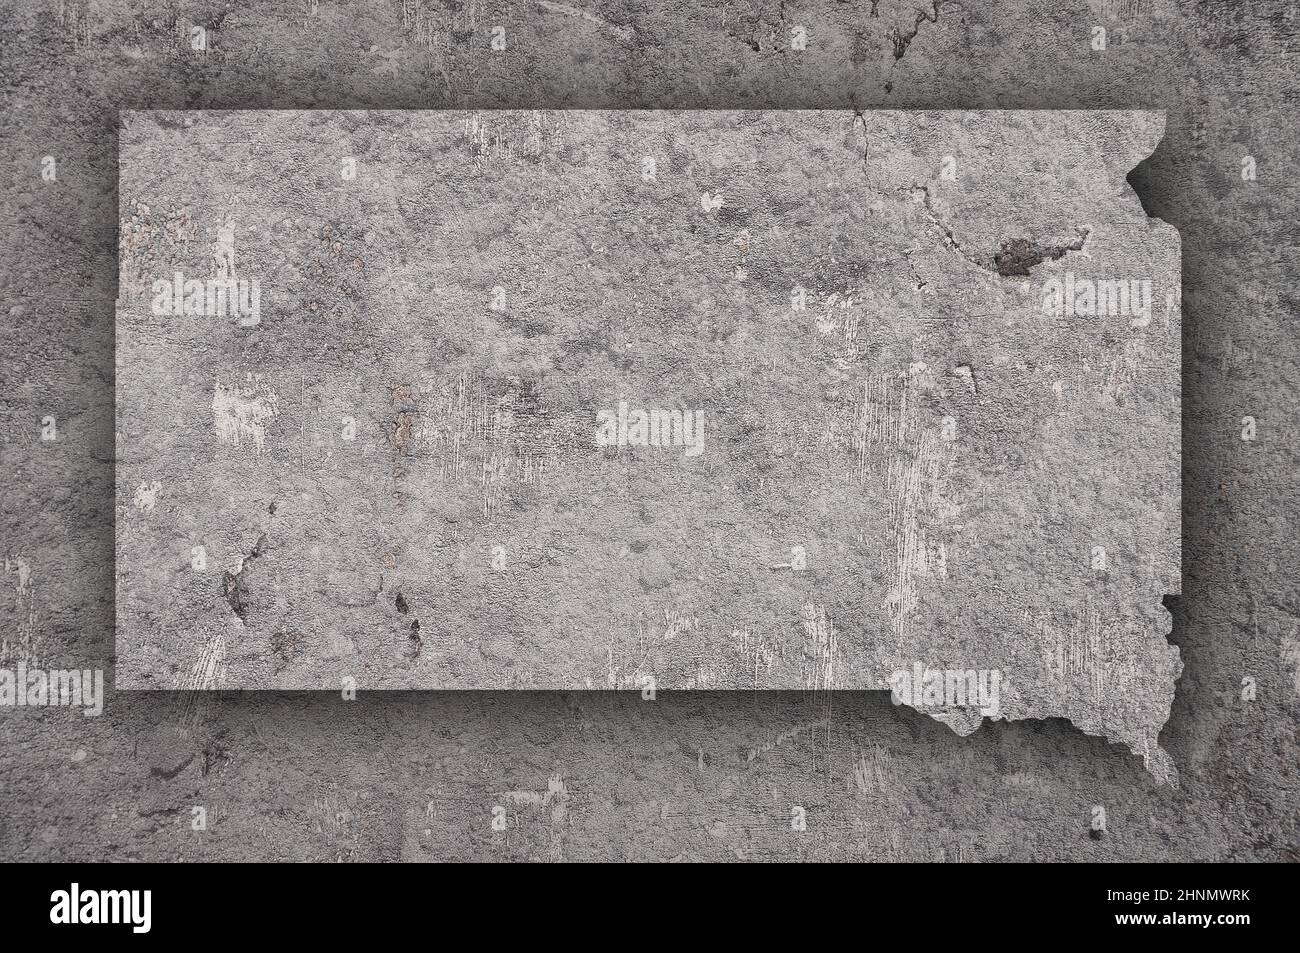 Map of South Dakota on weathered concrete Stock Photo